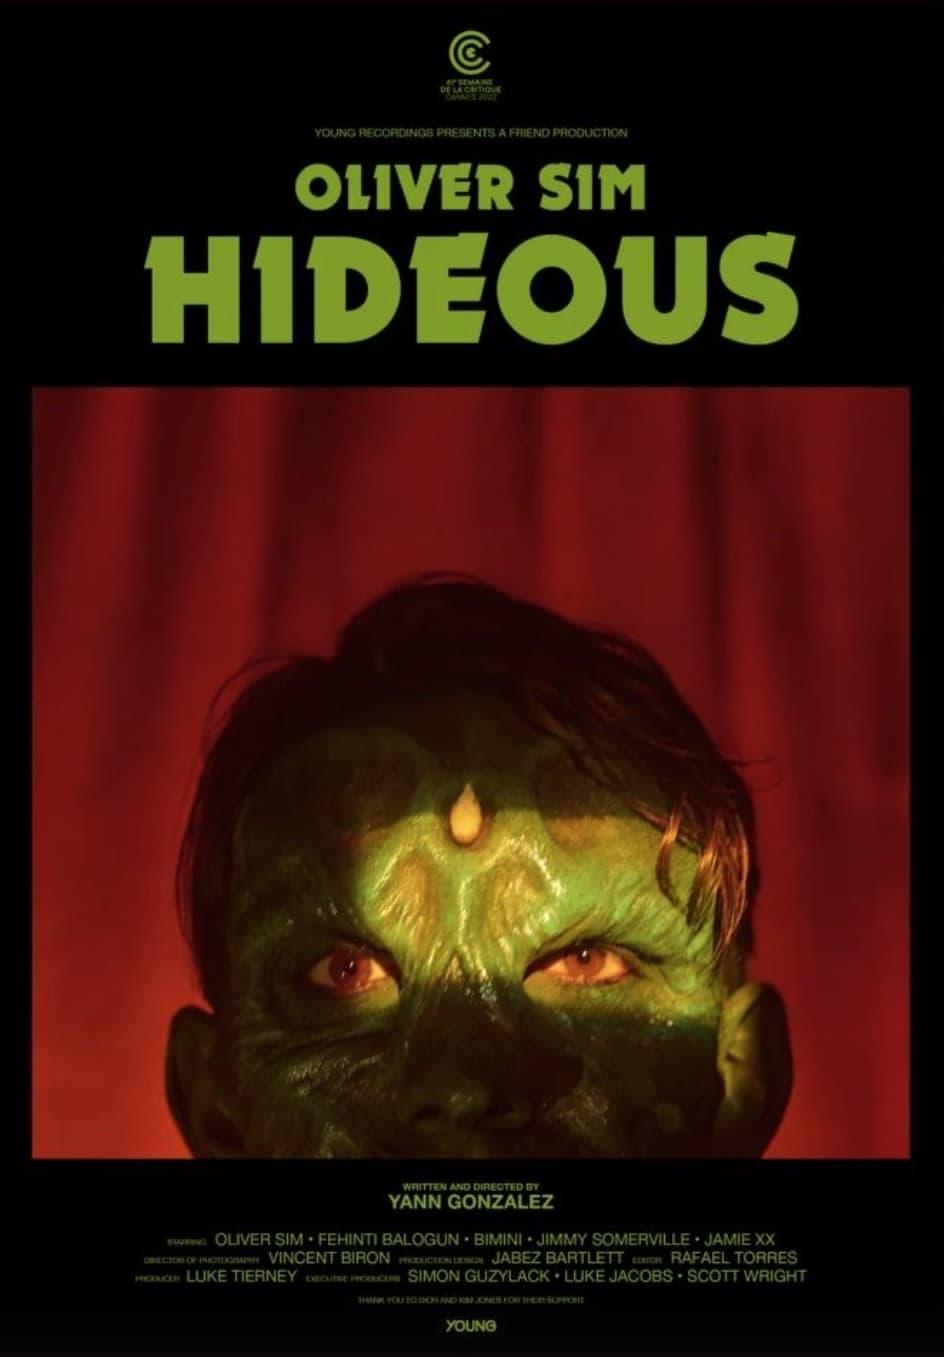 Hideous poster